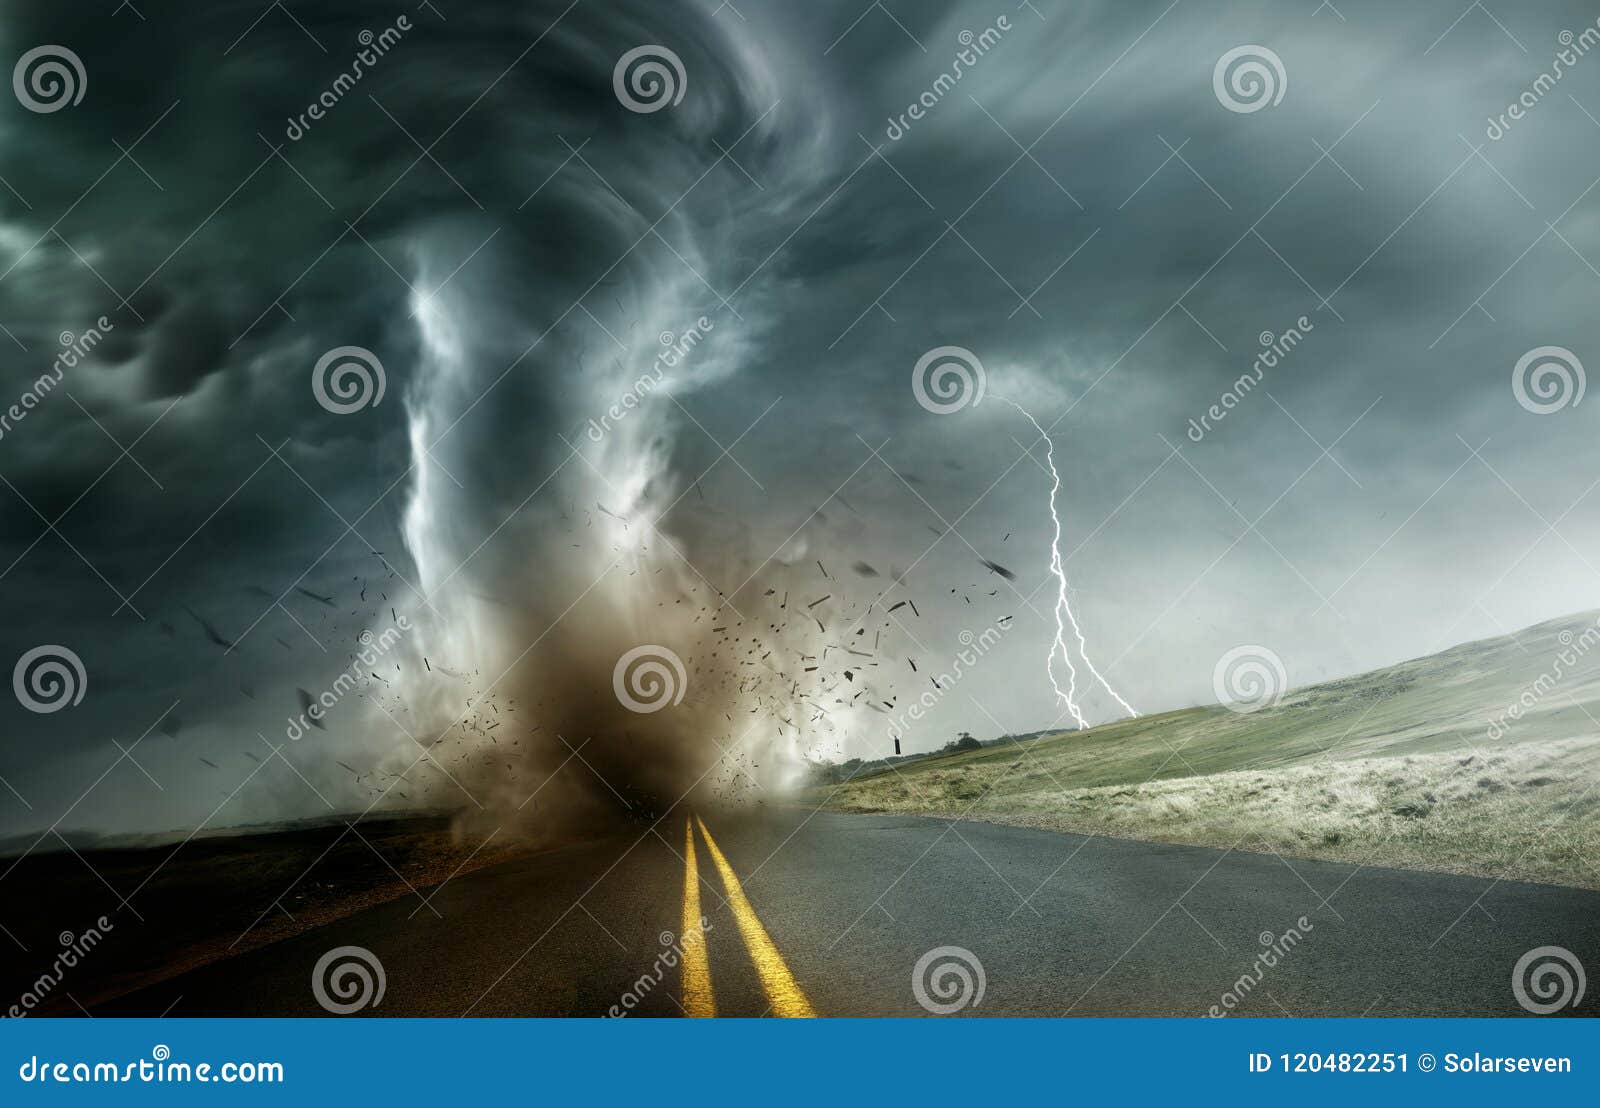 strong tornado moving through landscape